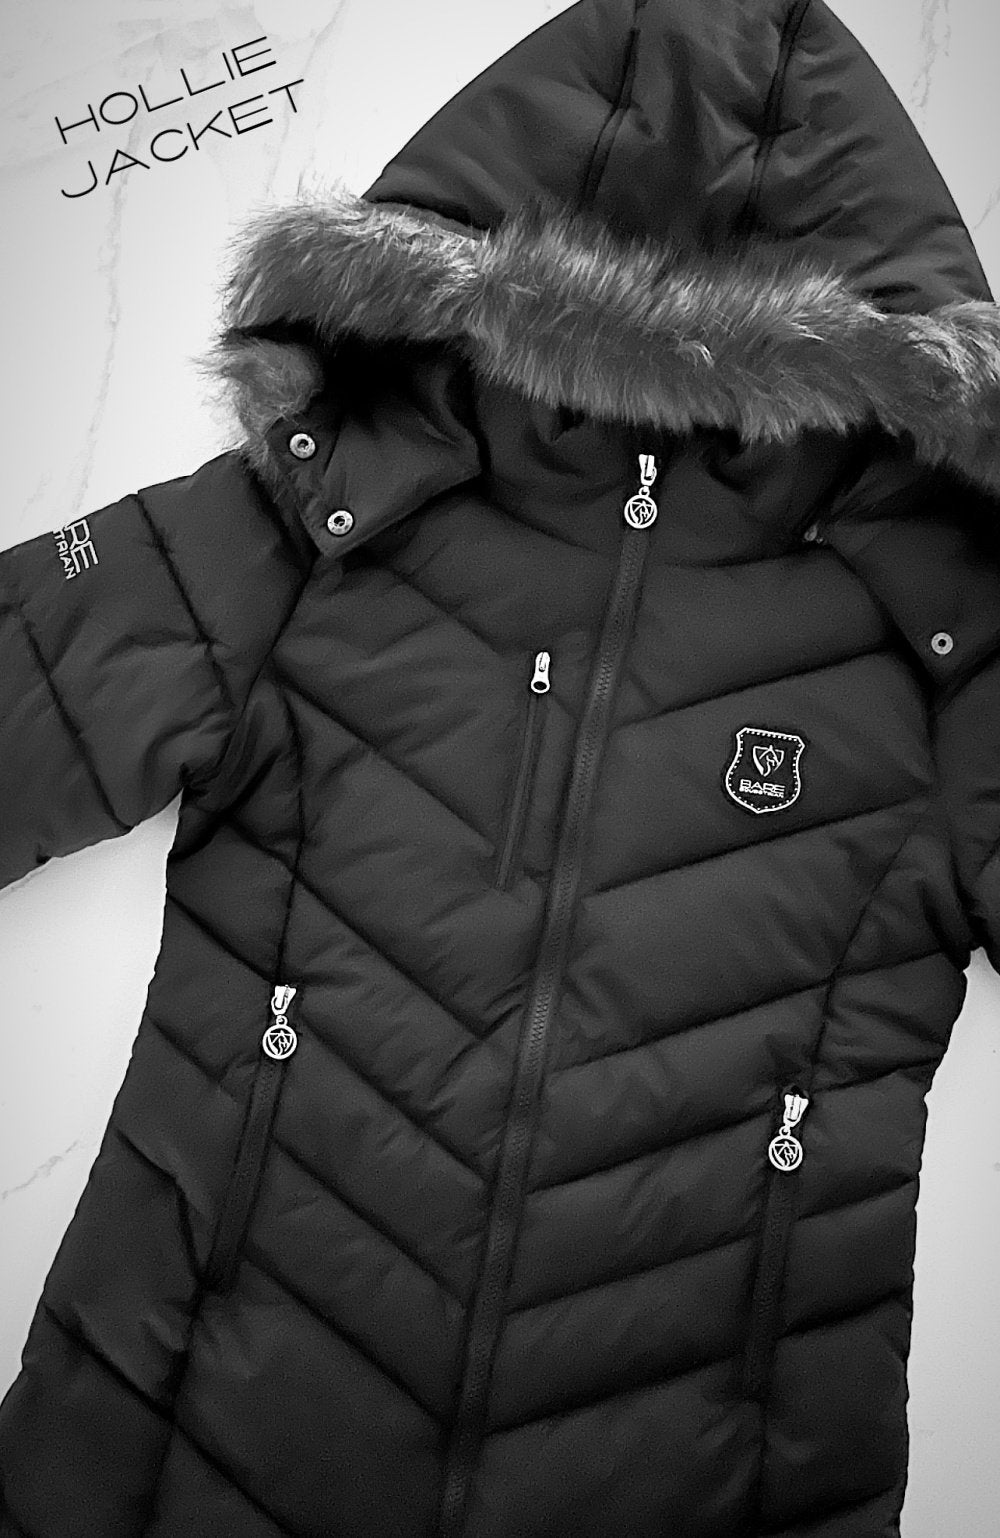 BARE Winter Series - Hollie Jacket